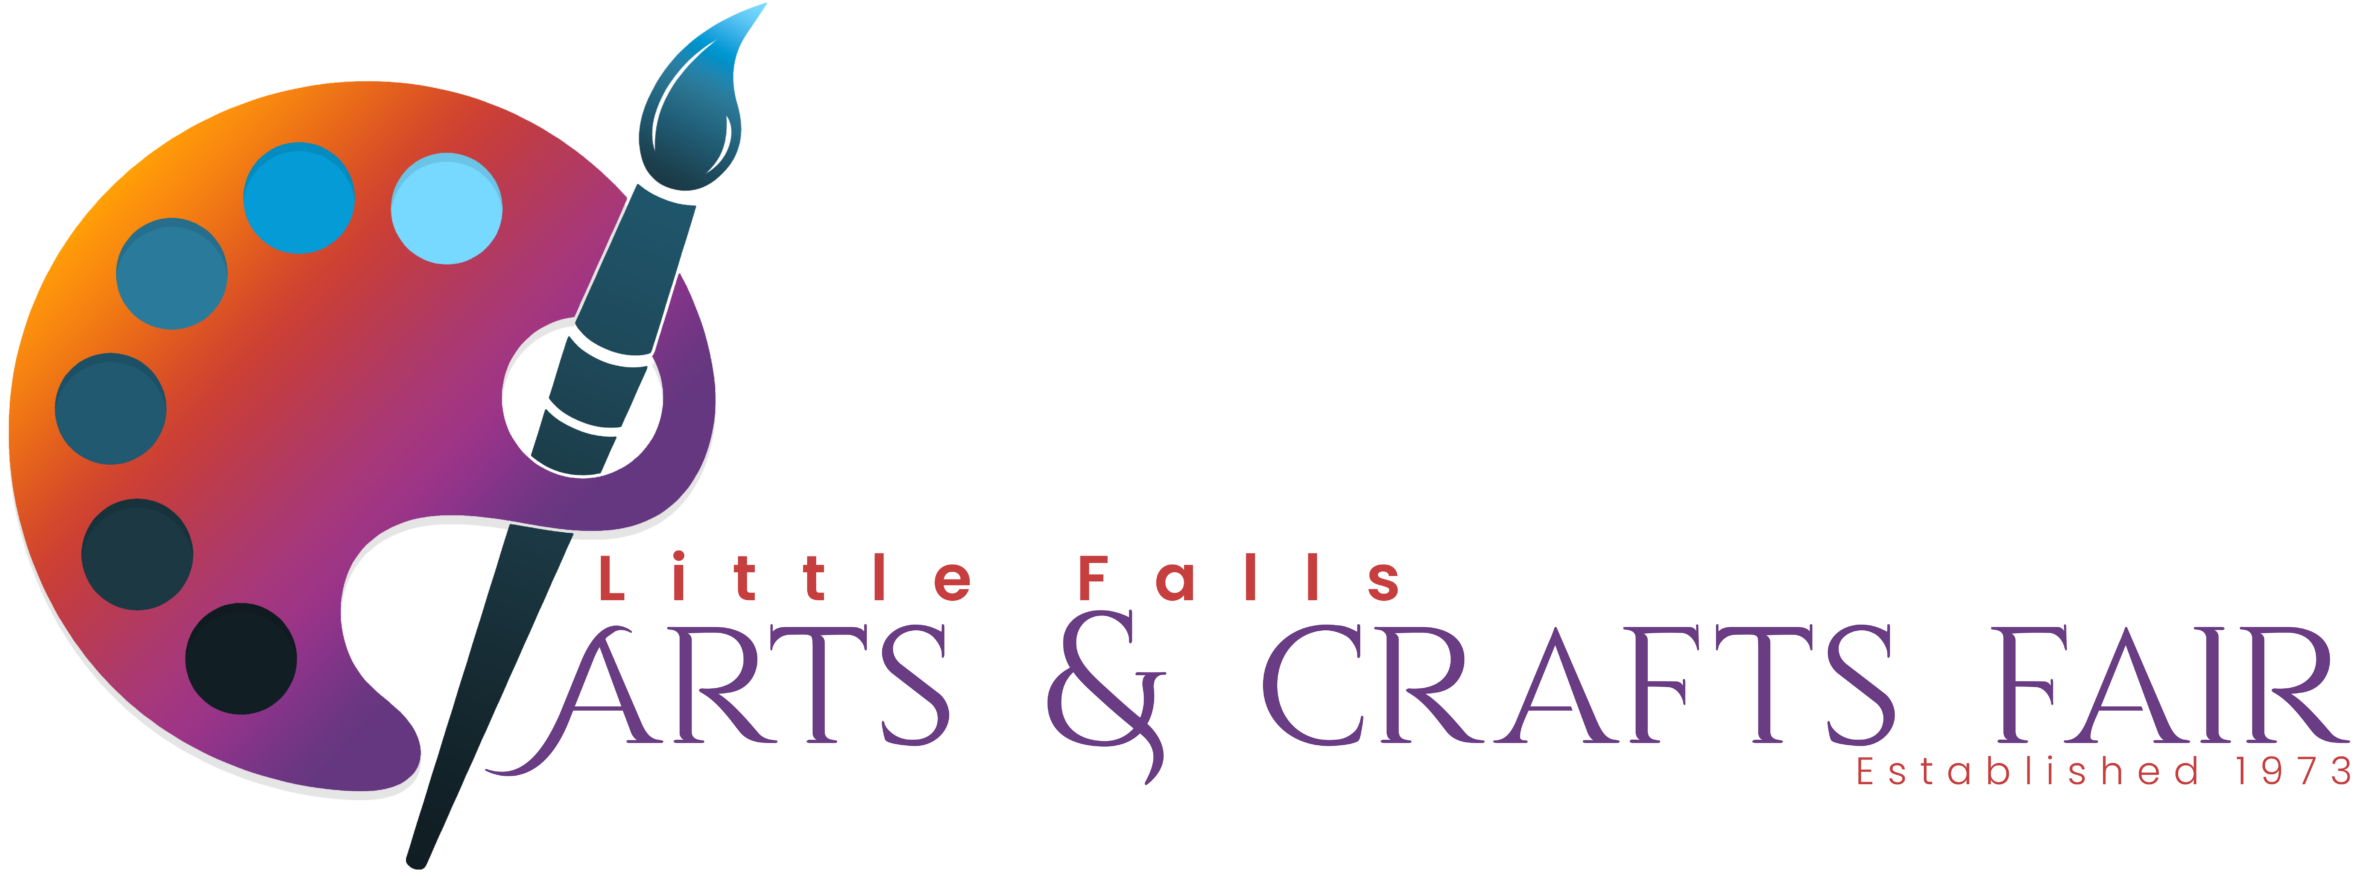 Little Falls Arts & Crafts Fair